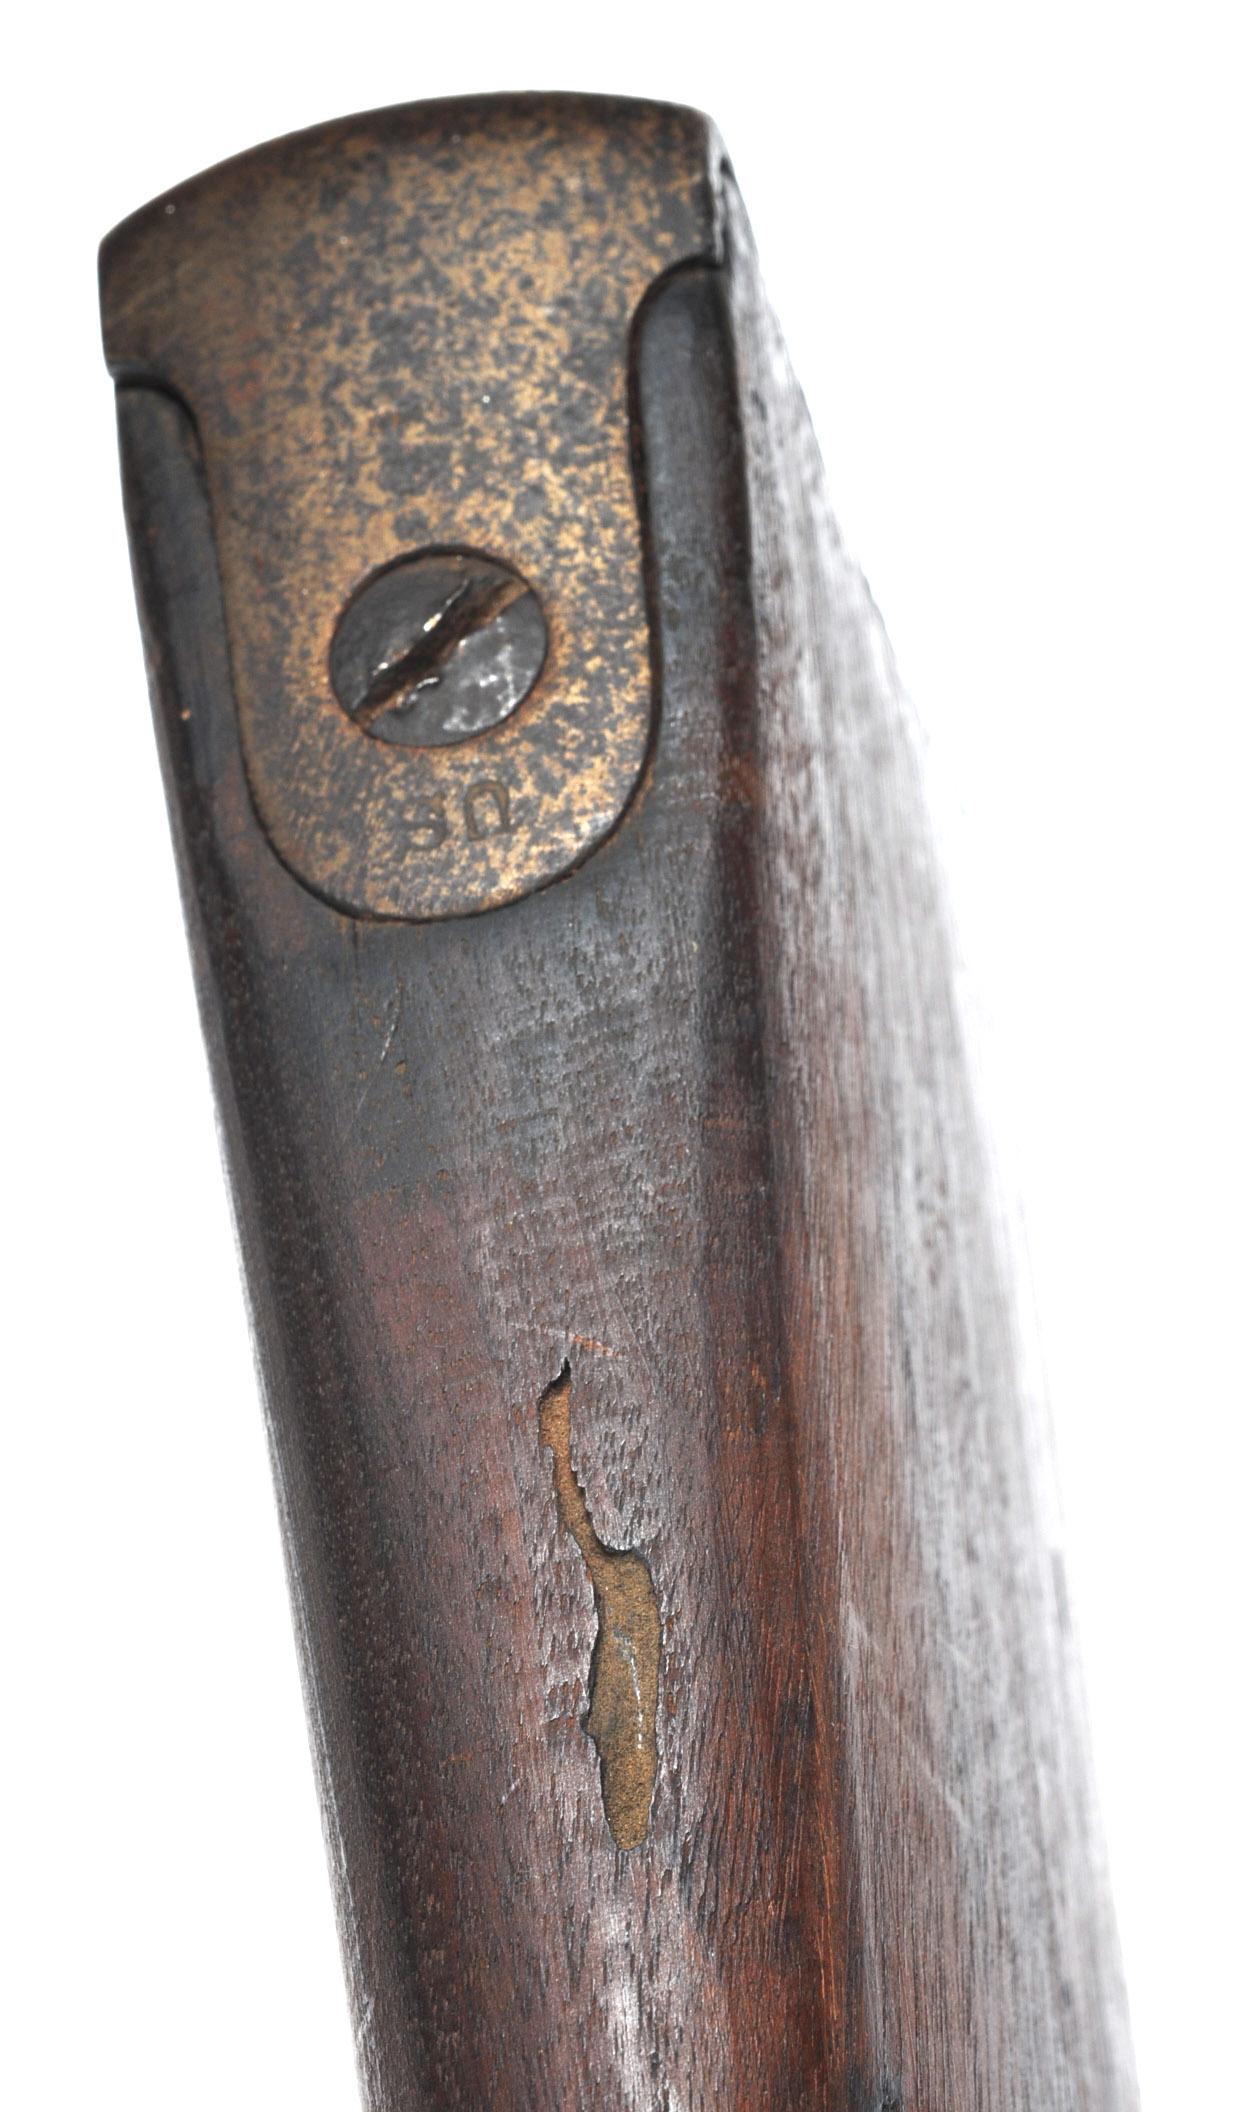 US Navy Springfield Model 1870 Remington Rolling Block Rifle - Antique - No FFL needed (KDW1)